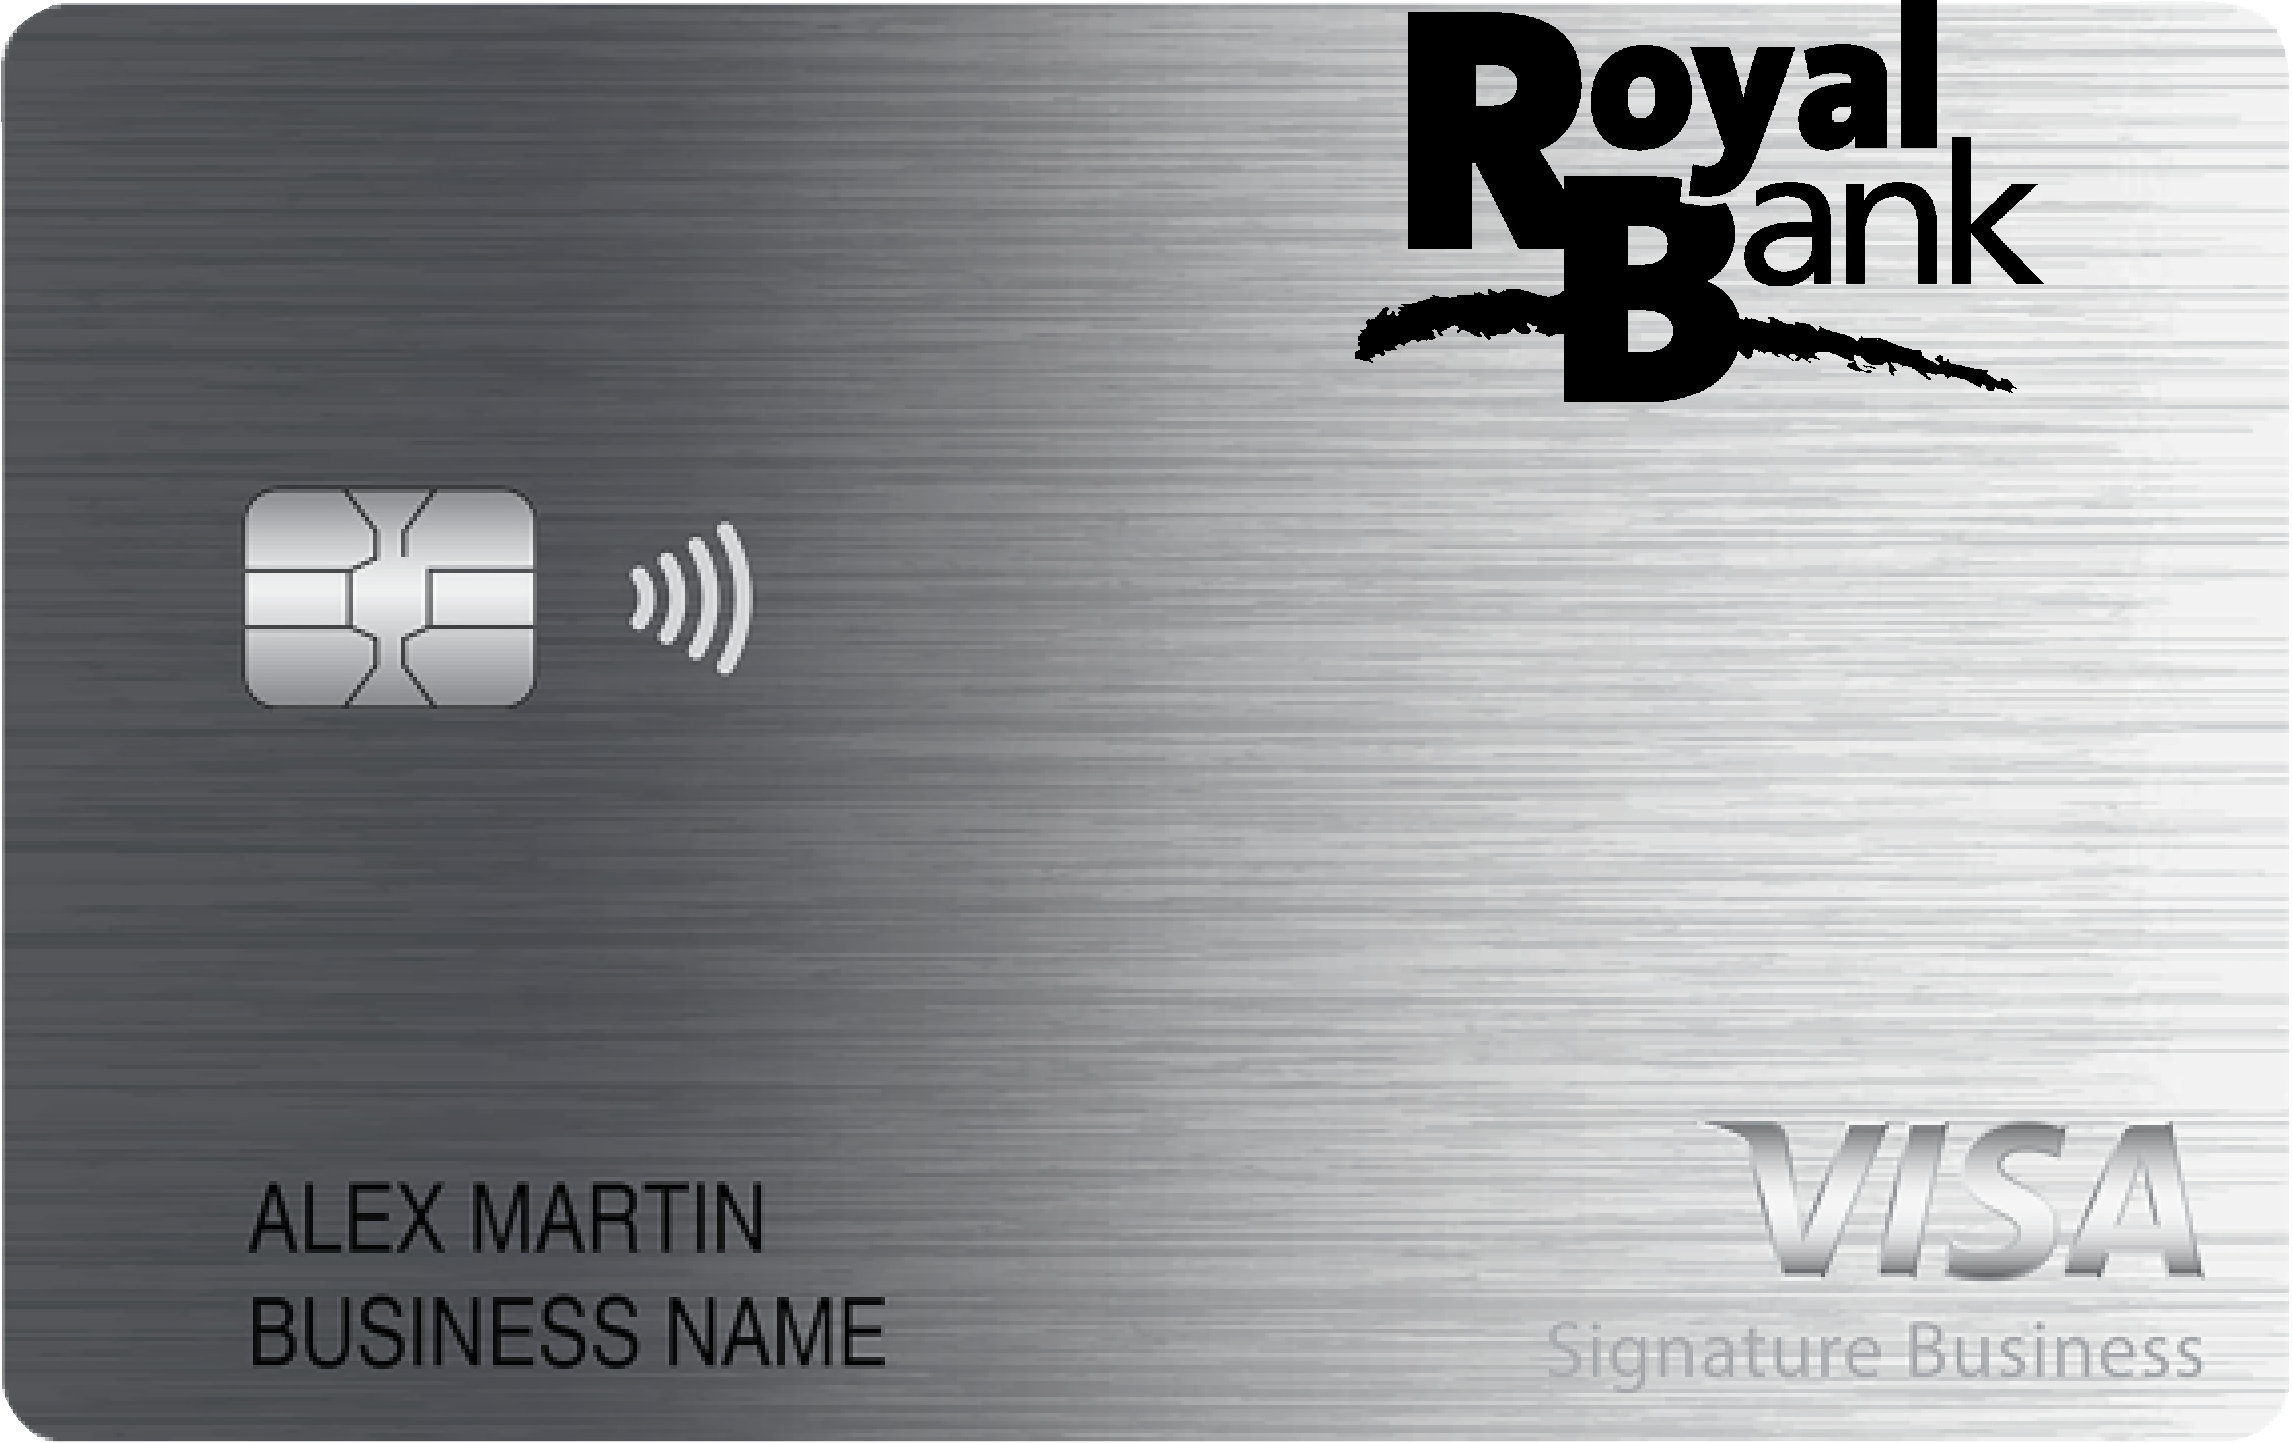 Royal Bank Smart Business Rewards Card